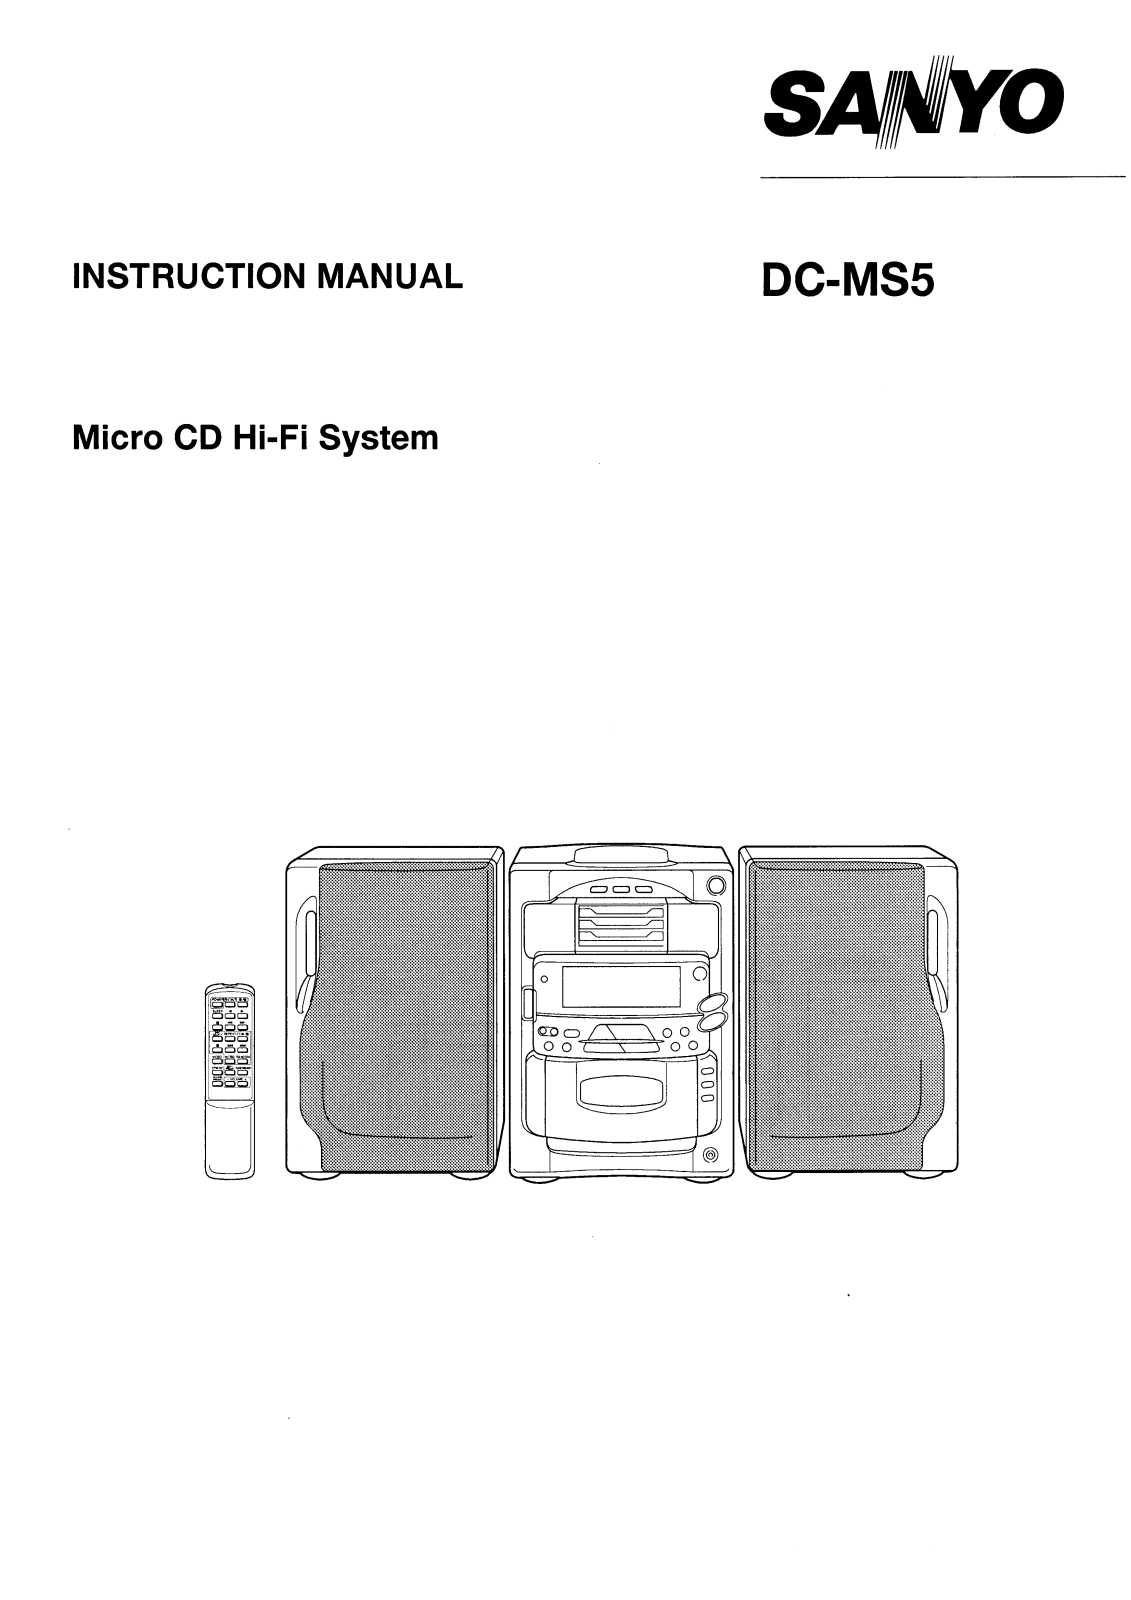 Sanyo DC-MS5 Instruction Manual